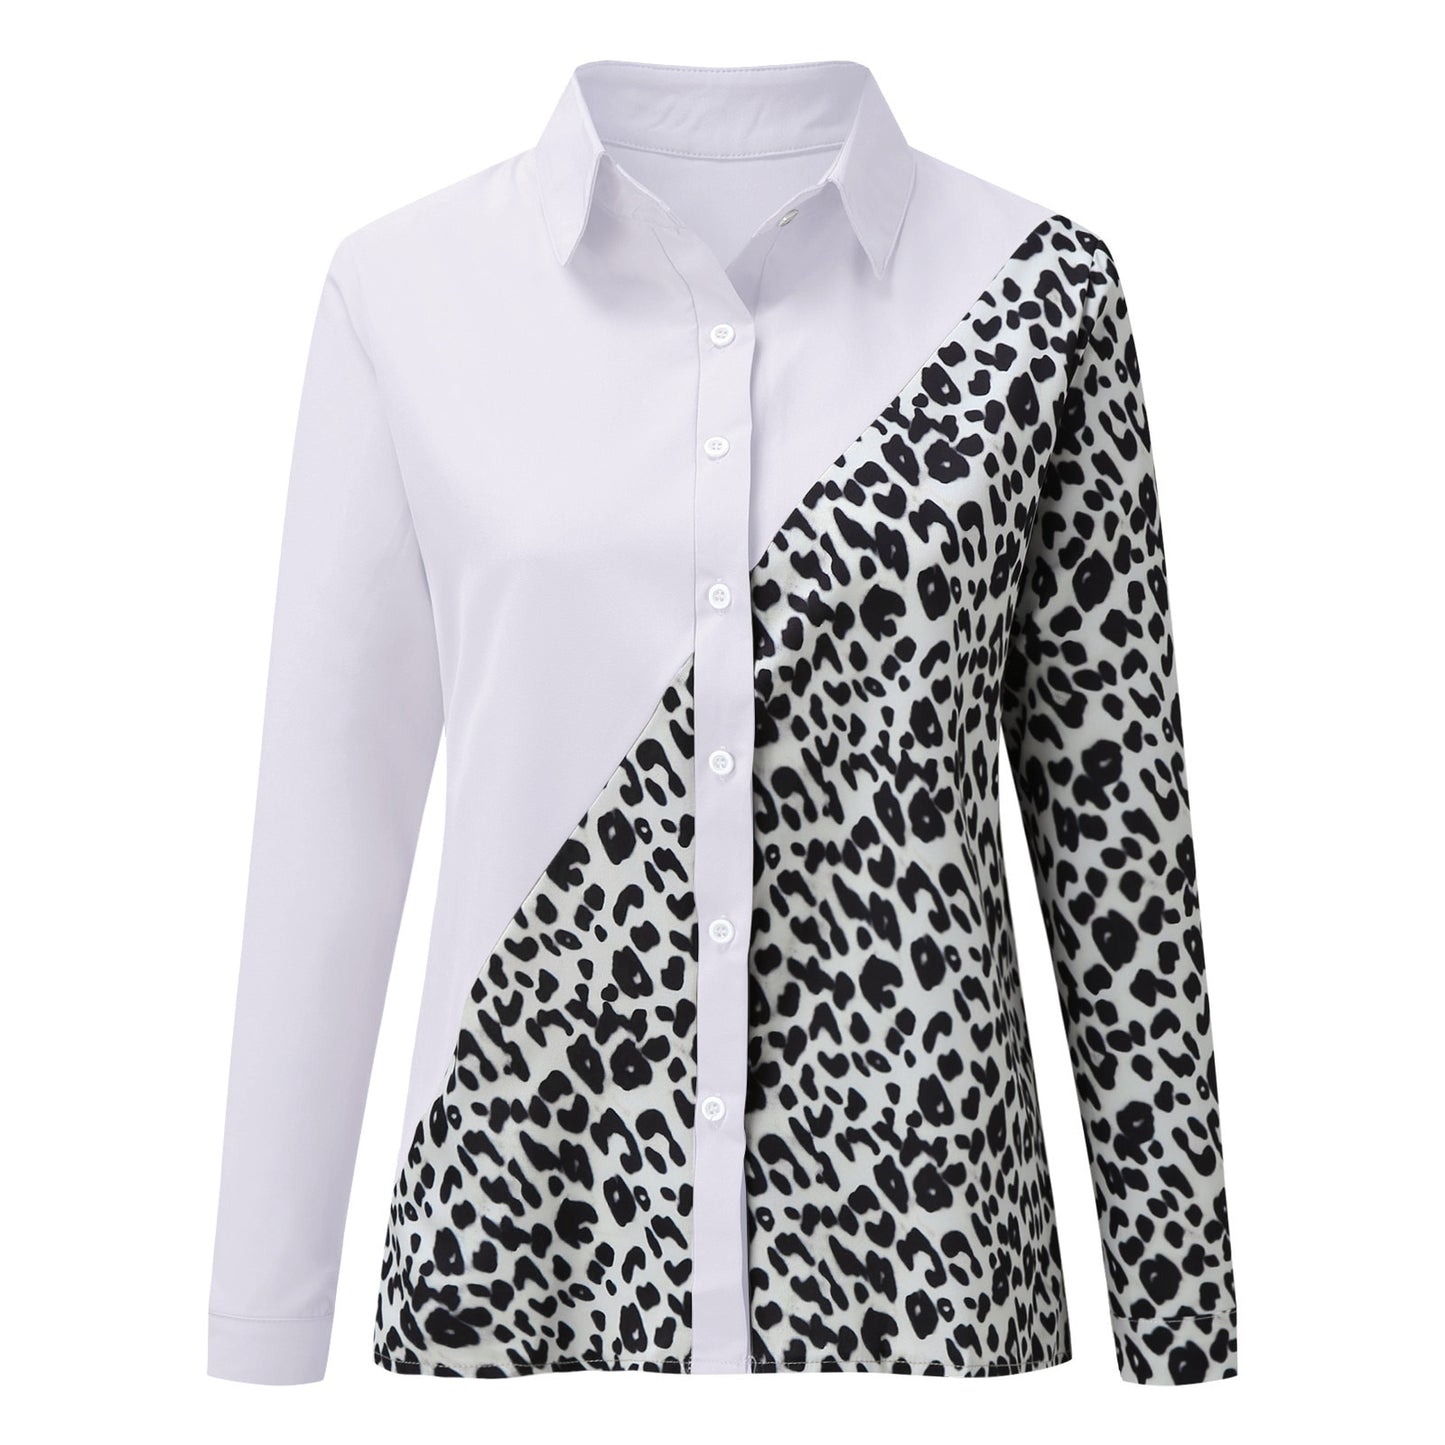 Leopard Blouse Autumn Long Sleeve Shirt